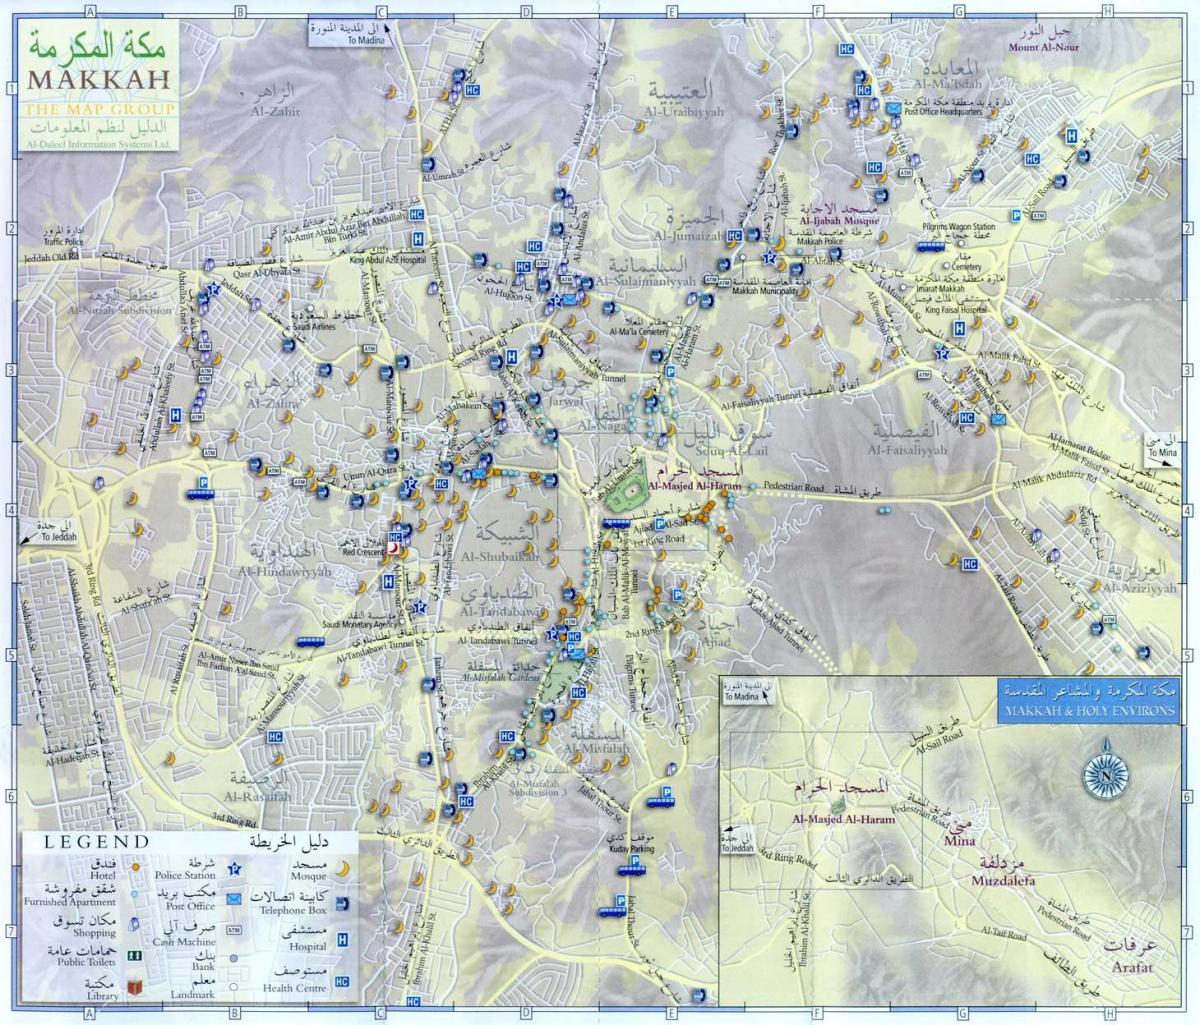  carte de la Mecque ziyarat lieux